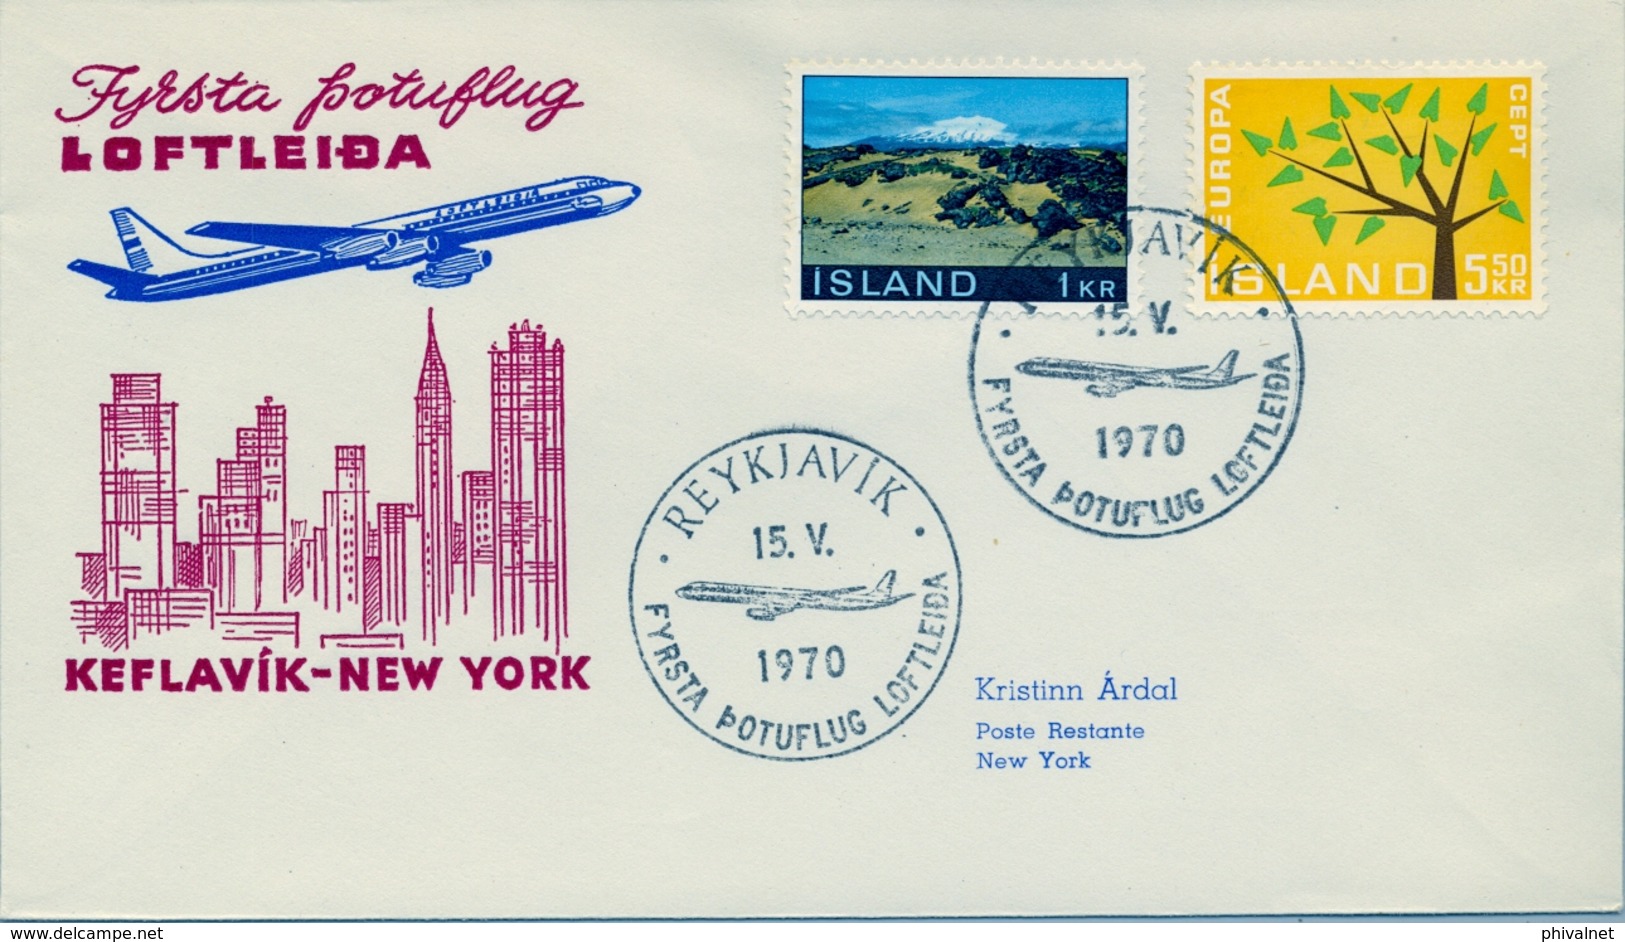 1970 , ISLANDIA , PRIMER VUELO LOFTLEIDA , REYKJAVIK - NEW YORK , KEFLAVIK AIRPORT - Storia Postale